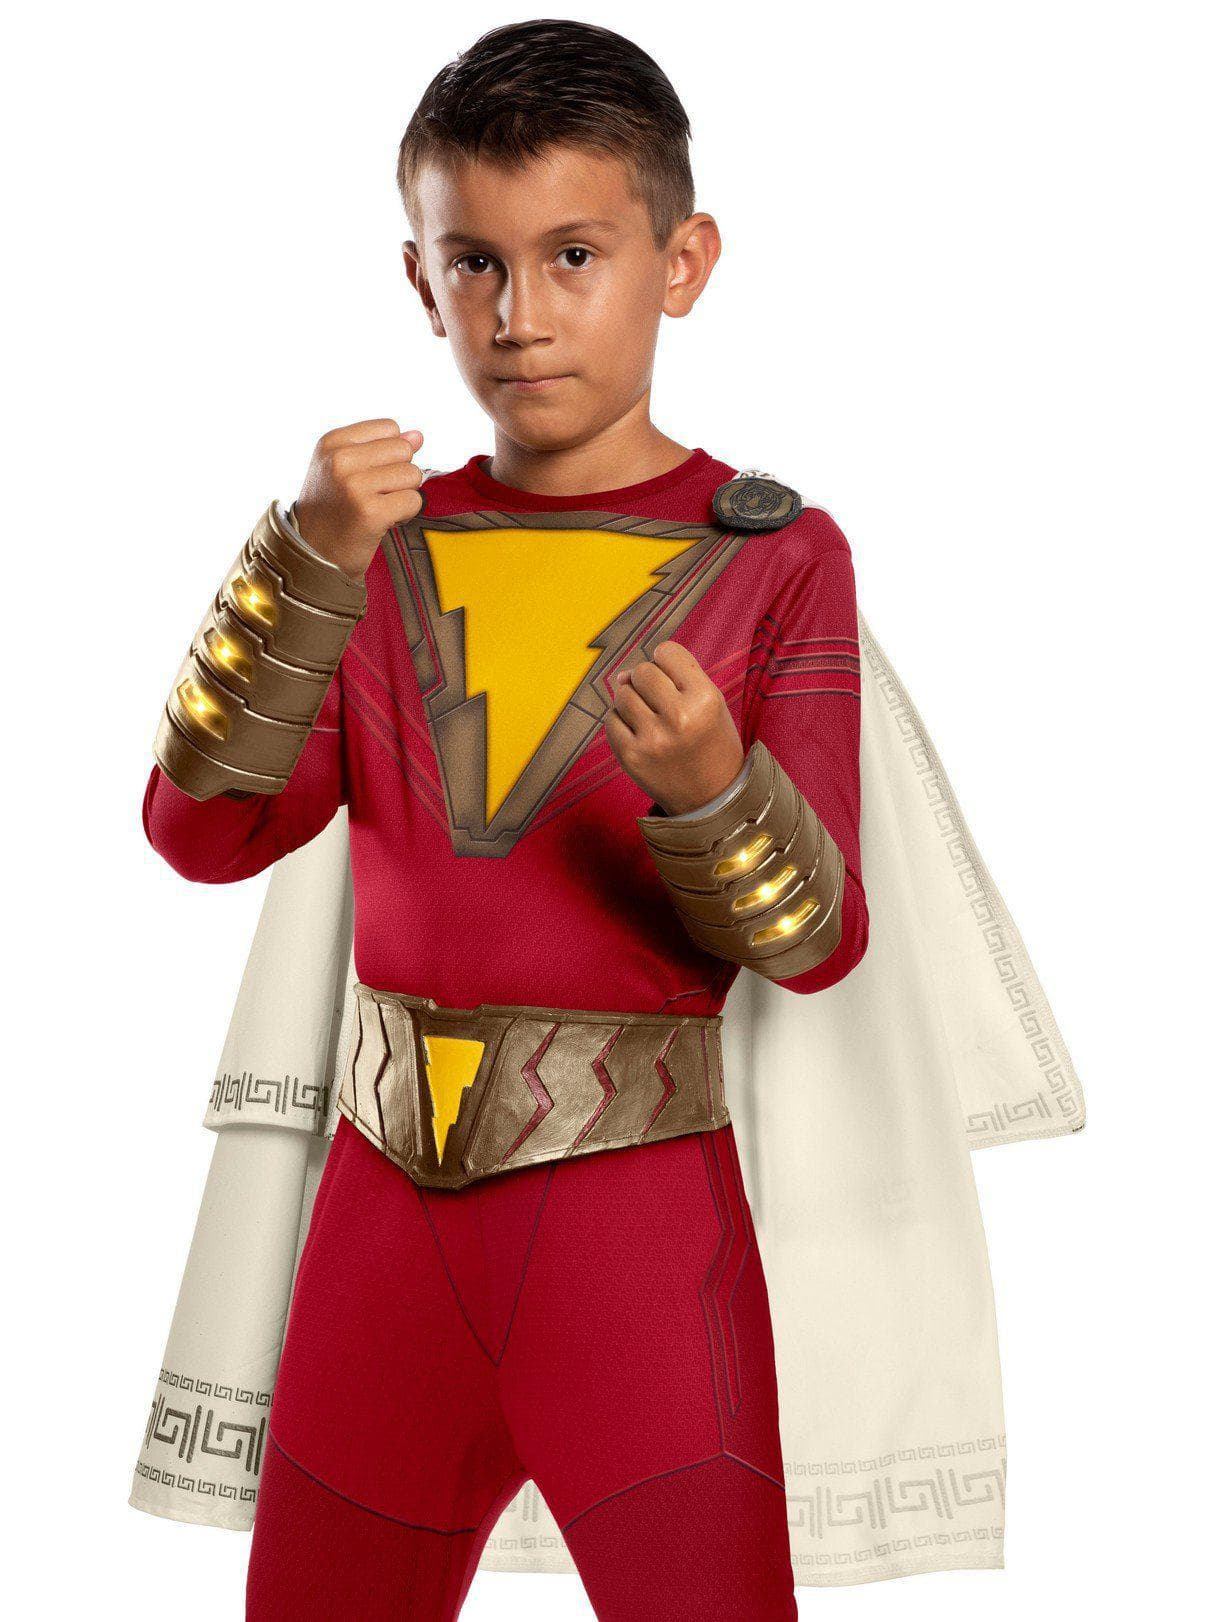 Kids' DC Comics Shazam Light Up Gauntlets and Belt - costumes.com